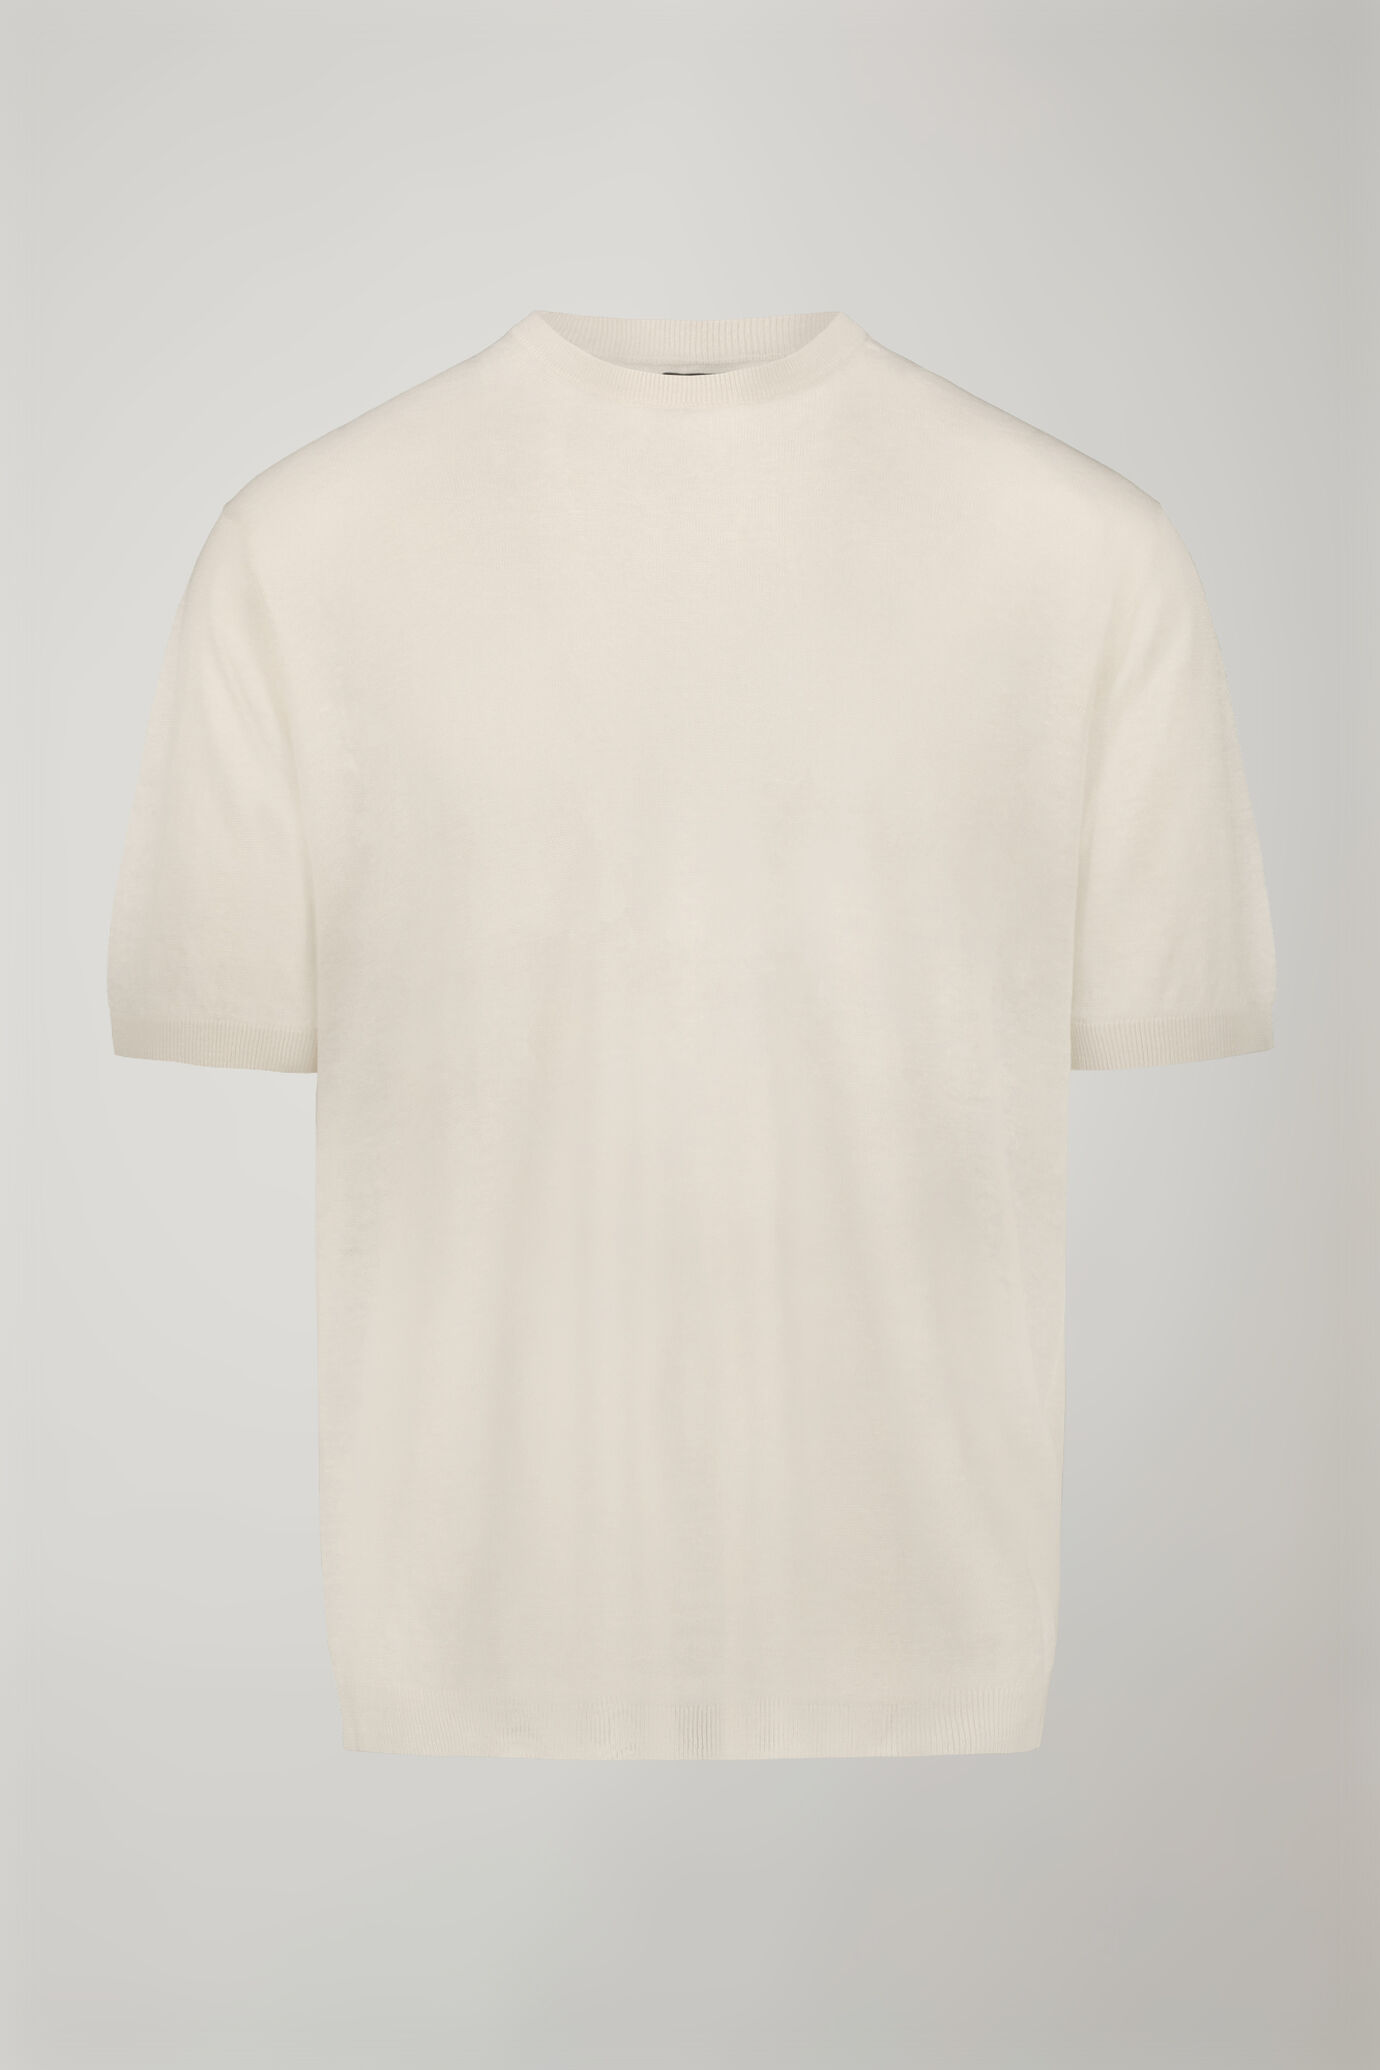 Men's knitted t-shirt 100% linen short-sleeved regular fit image number 4